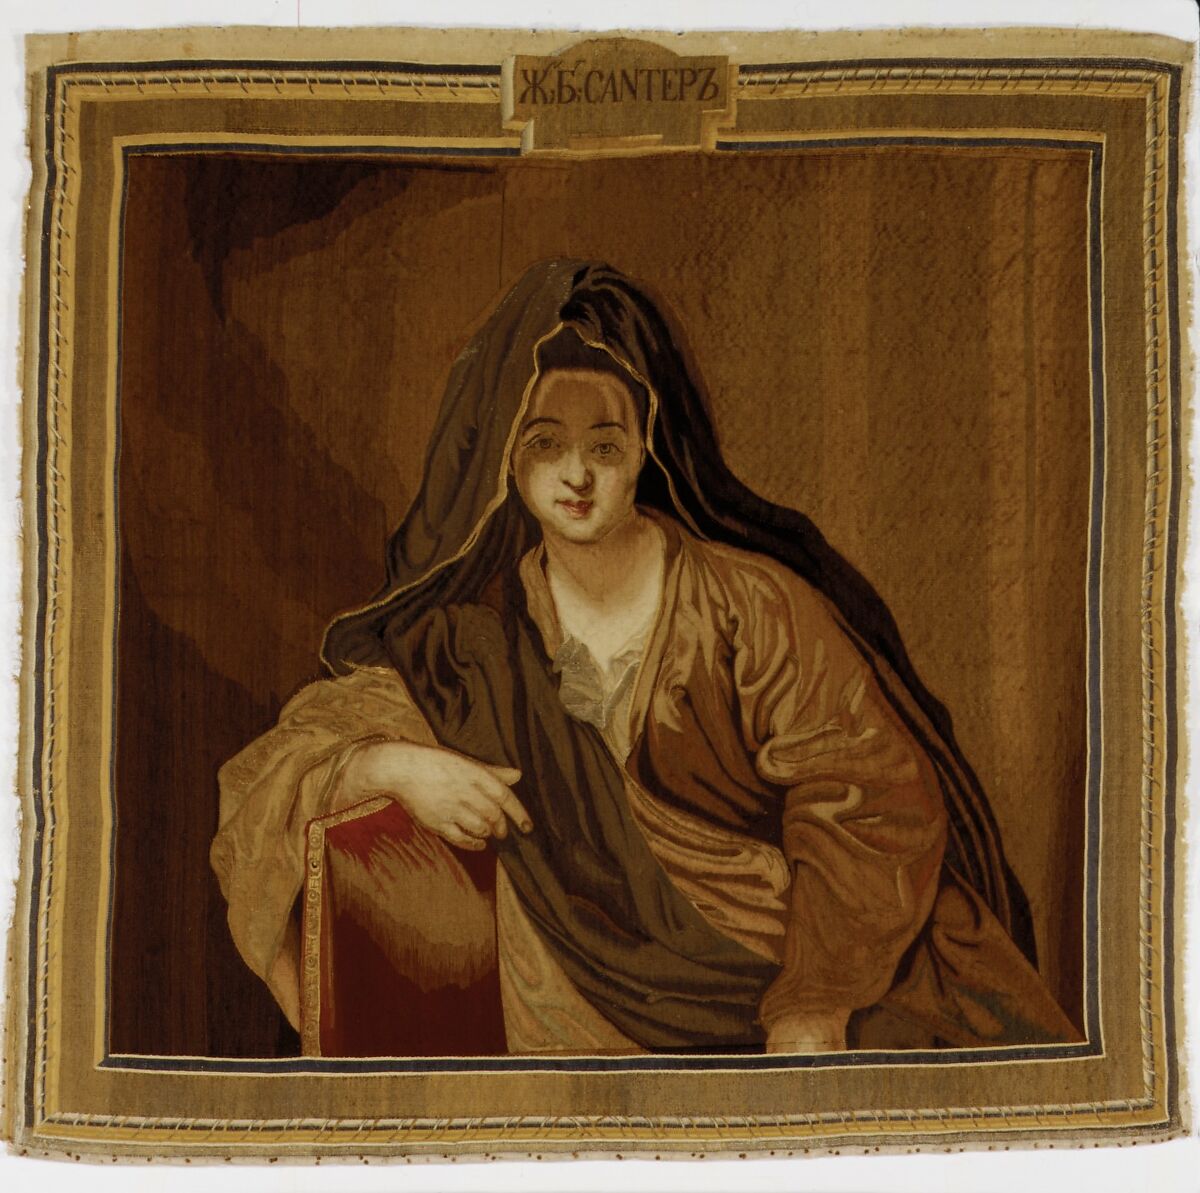 Seated Woman, Imperial Russian Tapestry Manufactory, Saint Petersburg, Wool, metal thread (20-25 warps per inch, 8-10 per cm.), Russian, St. Petersburg 